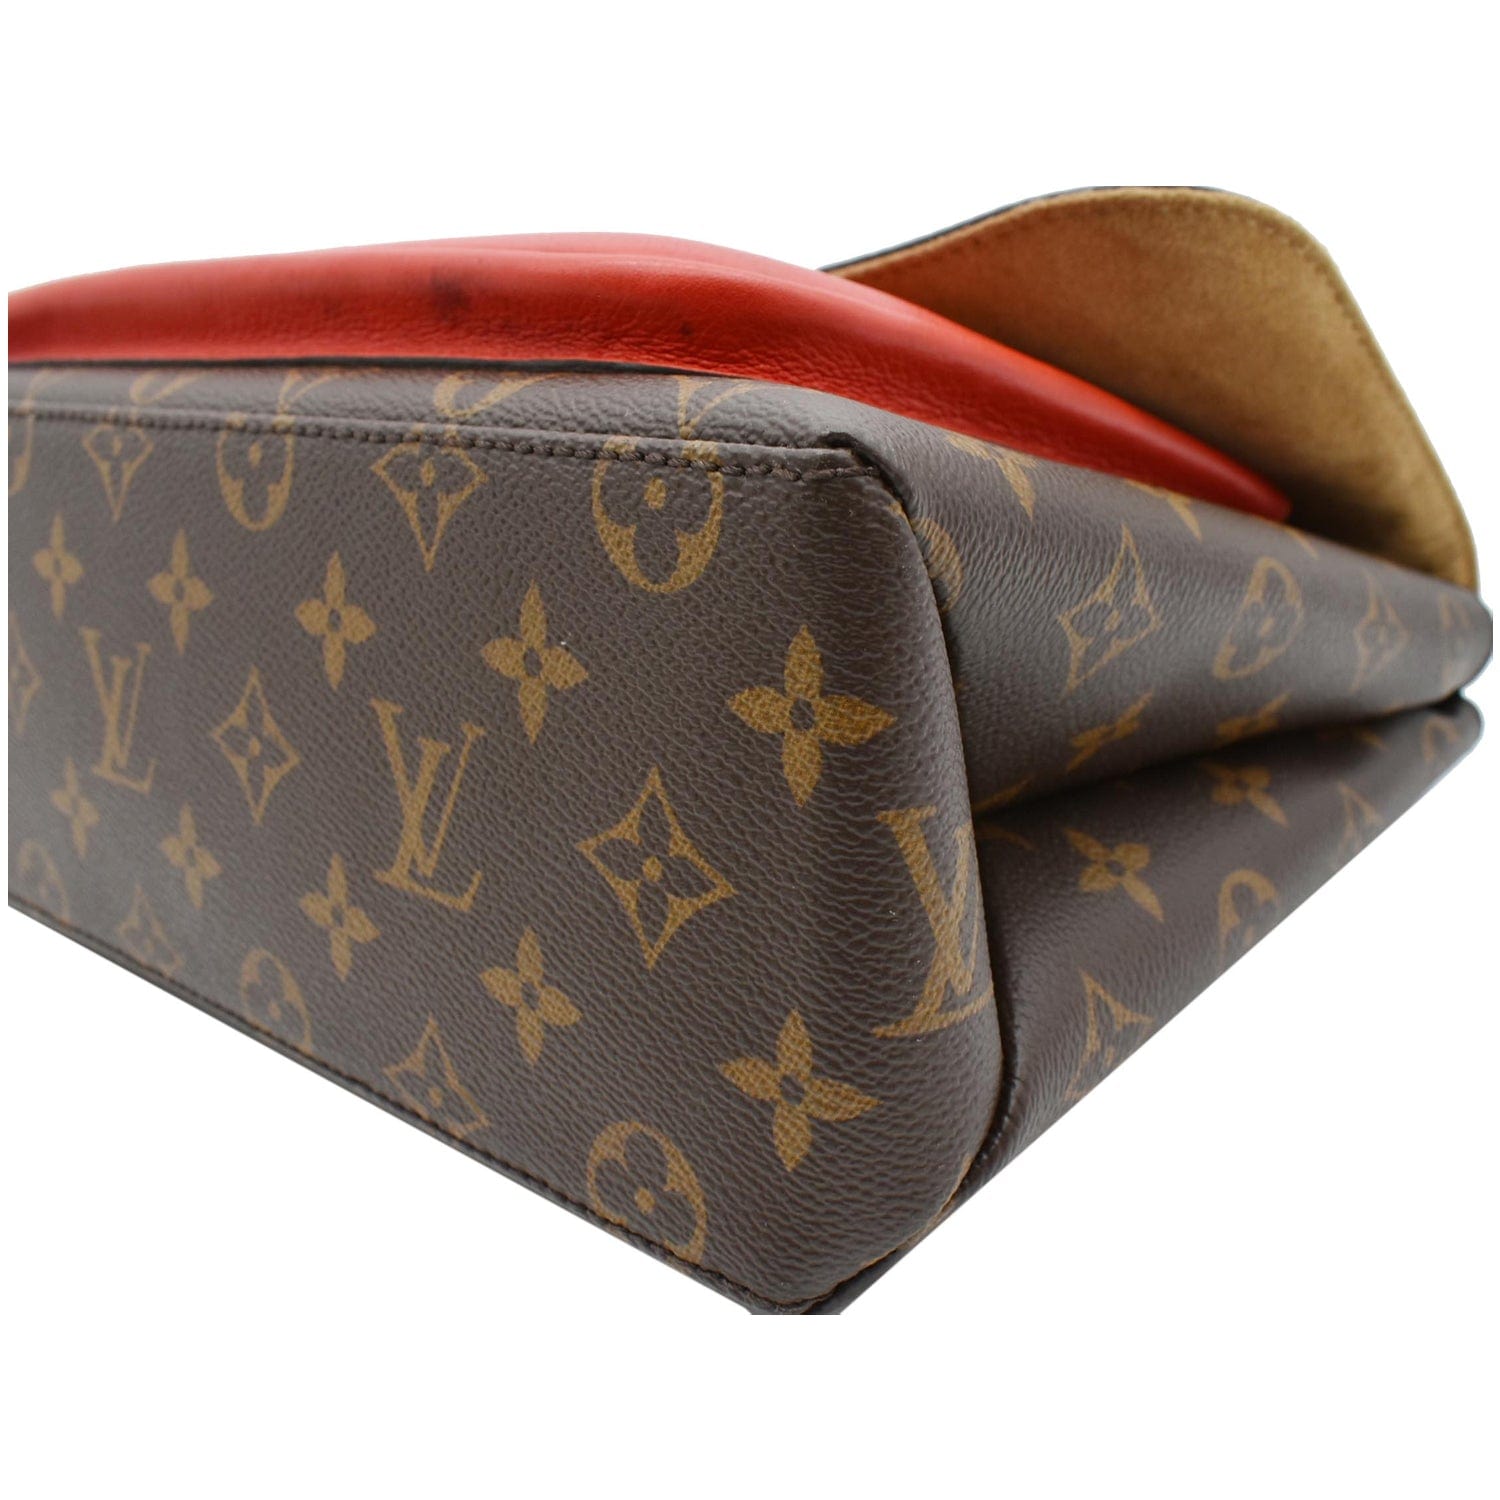 Louis Vuitton Marignan Handbag Monogram Canvas with Leather Neutral